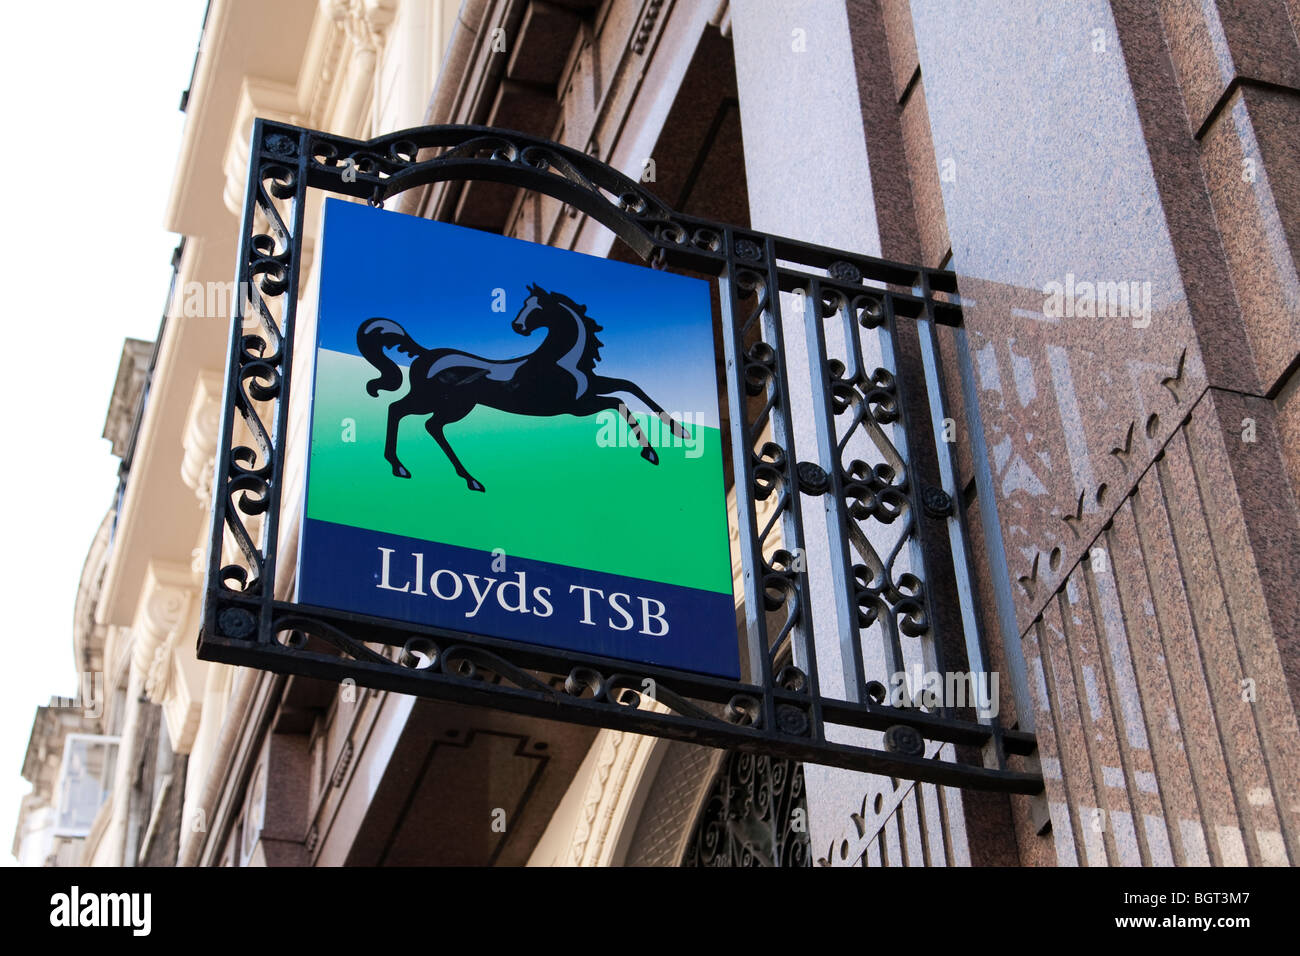 Lloyds tsb bank sign on the Strand, London Stock Photo